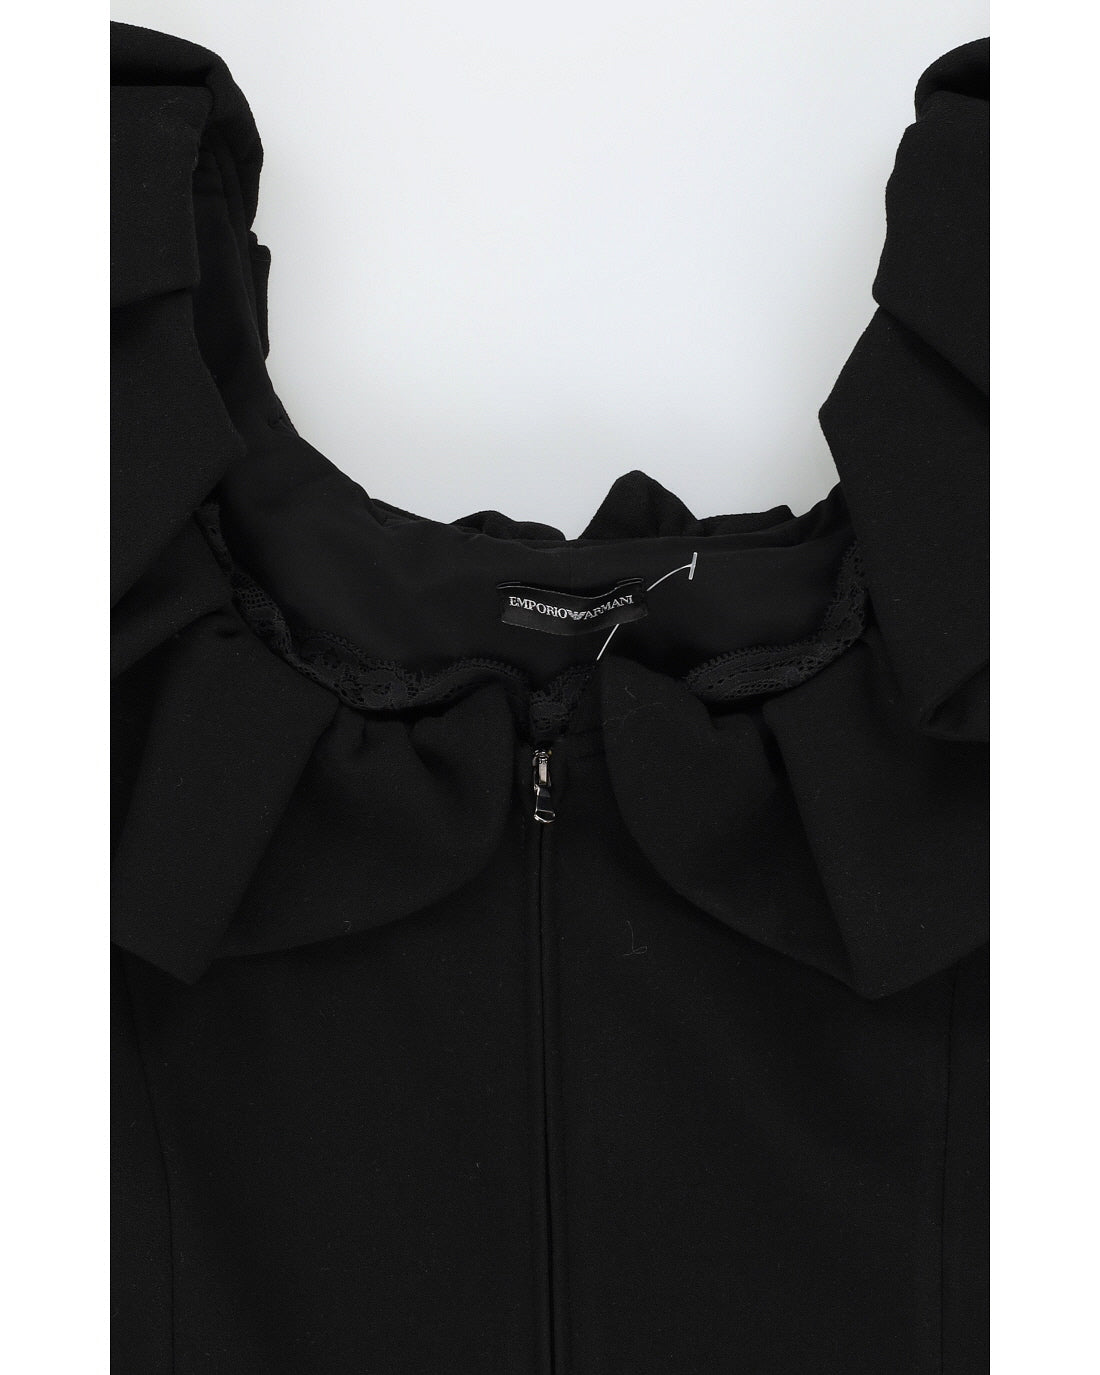 Emporio Armani Black Dress - S